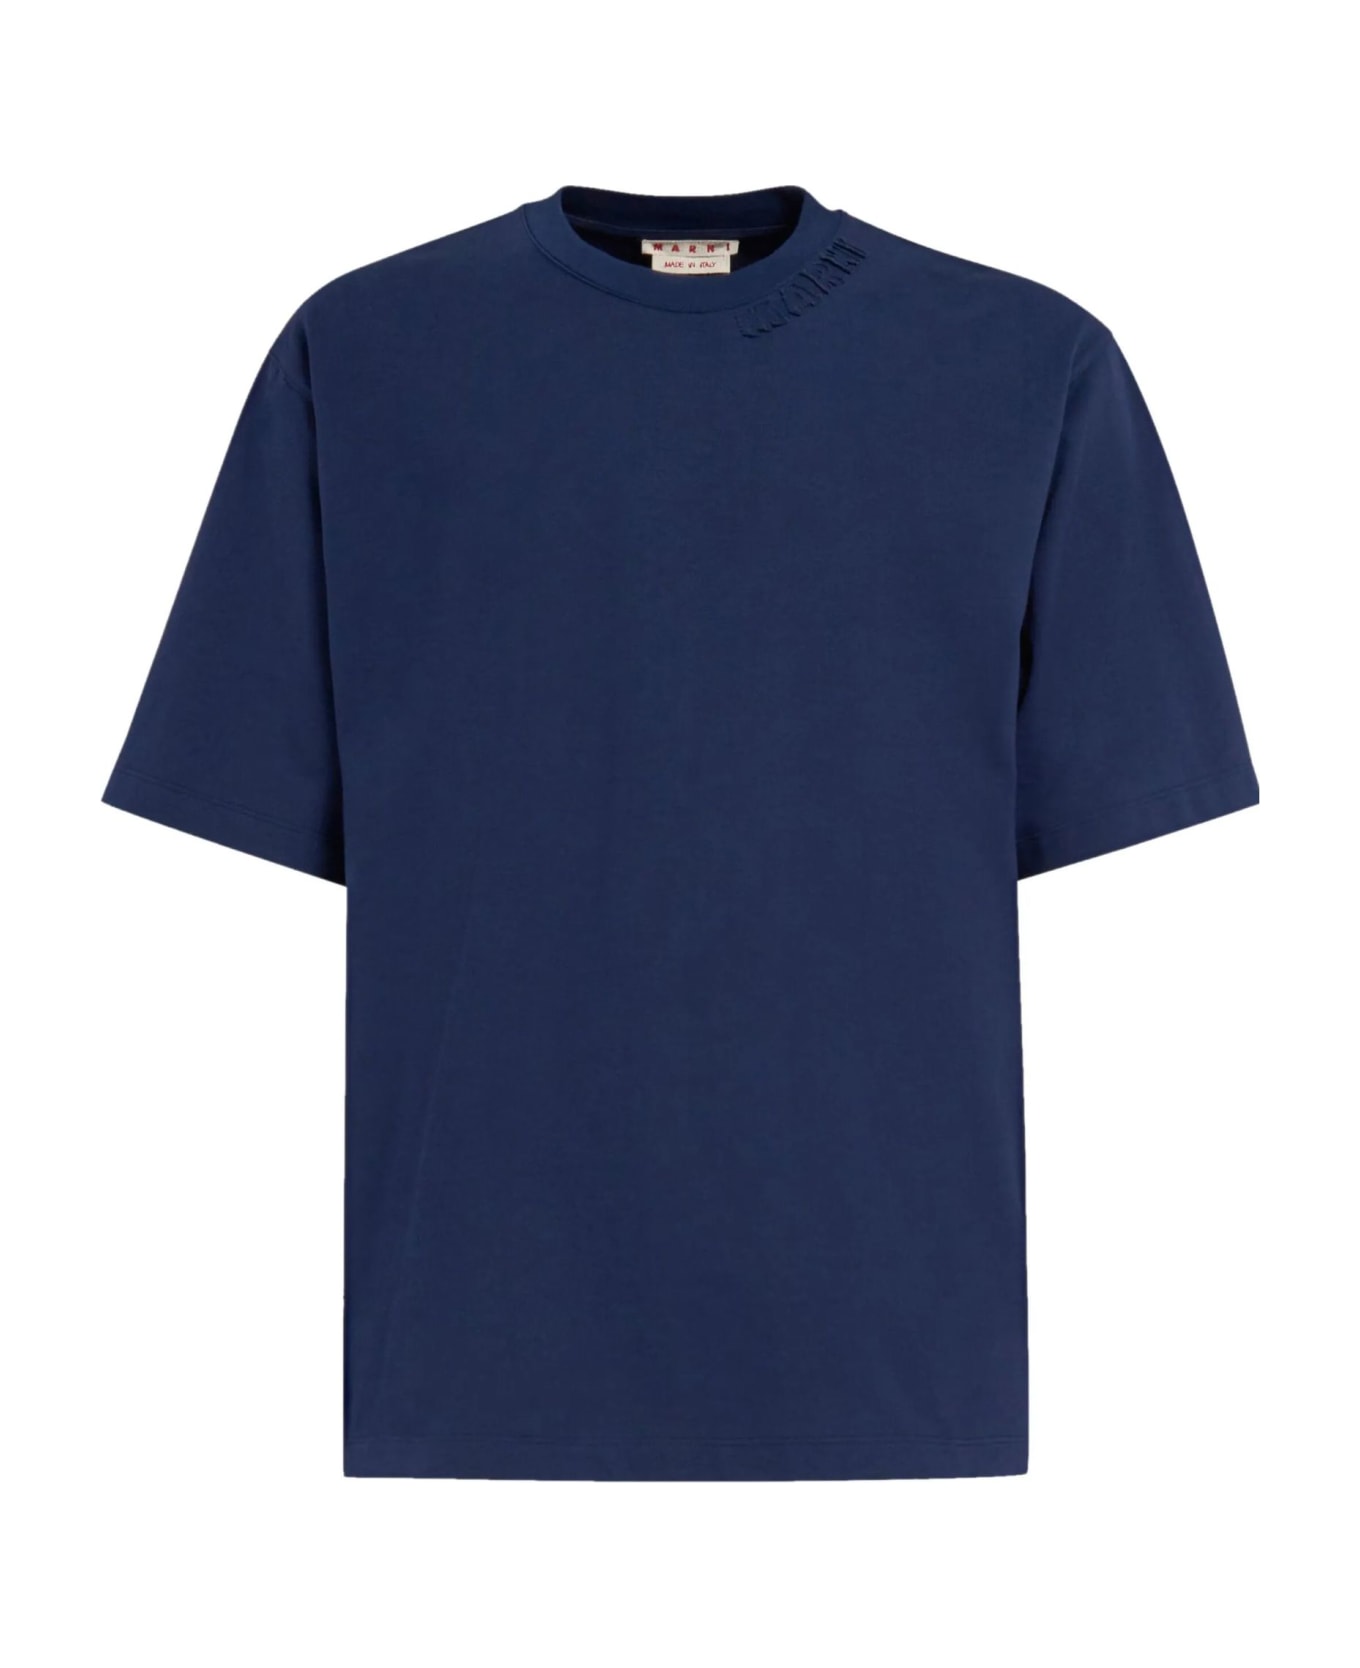 Marni Navy Blue Cotton T-shirt - Blue